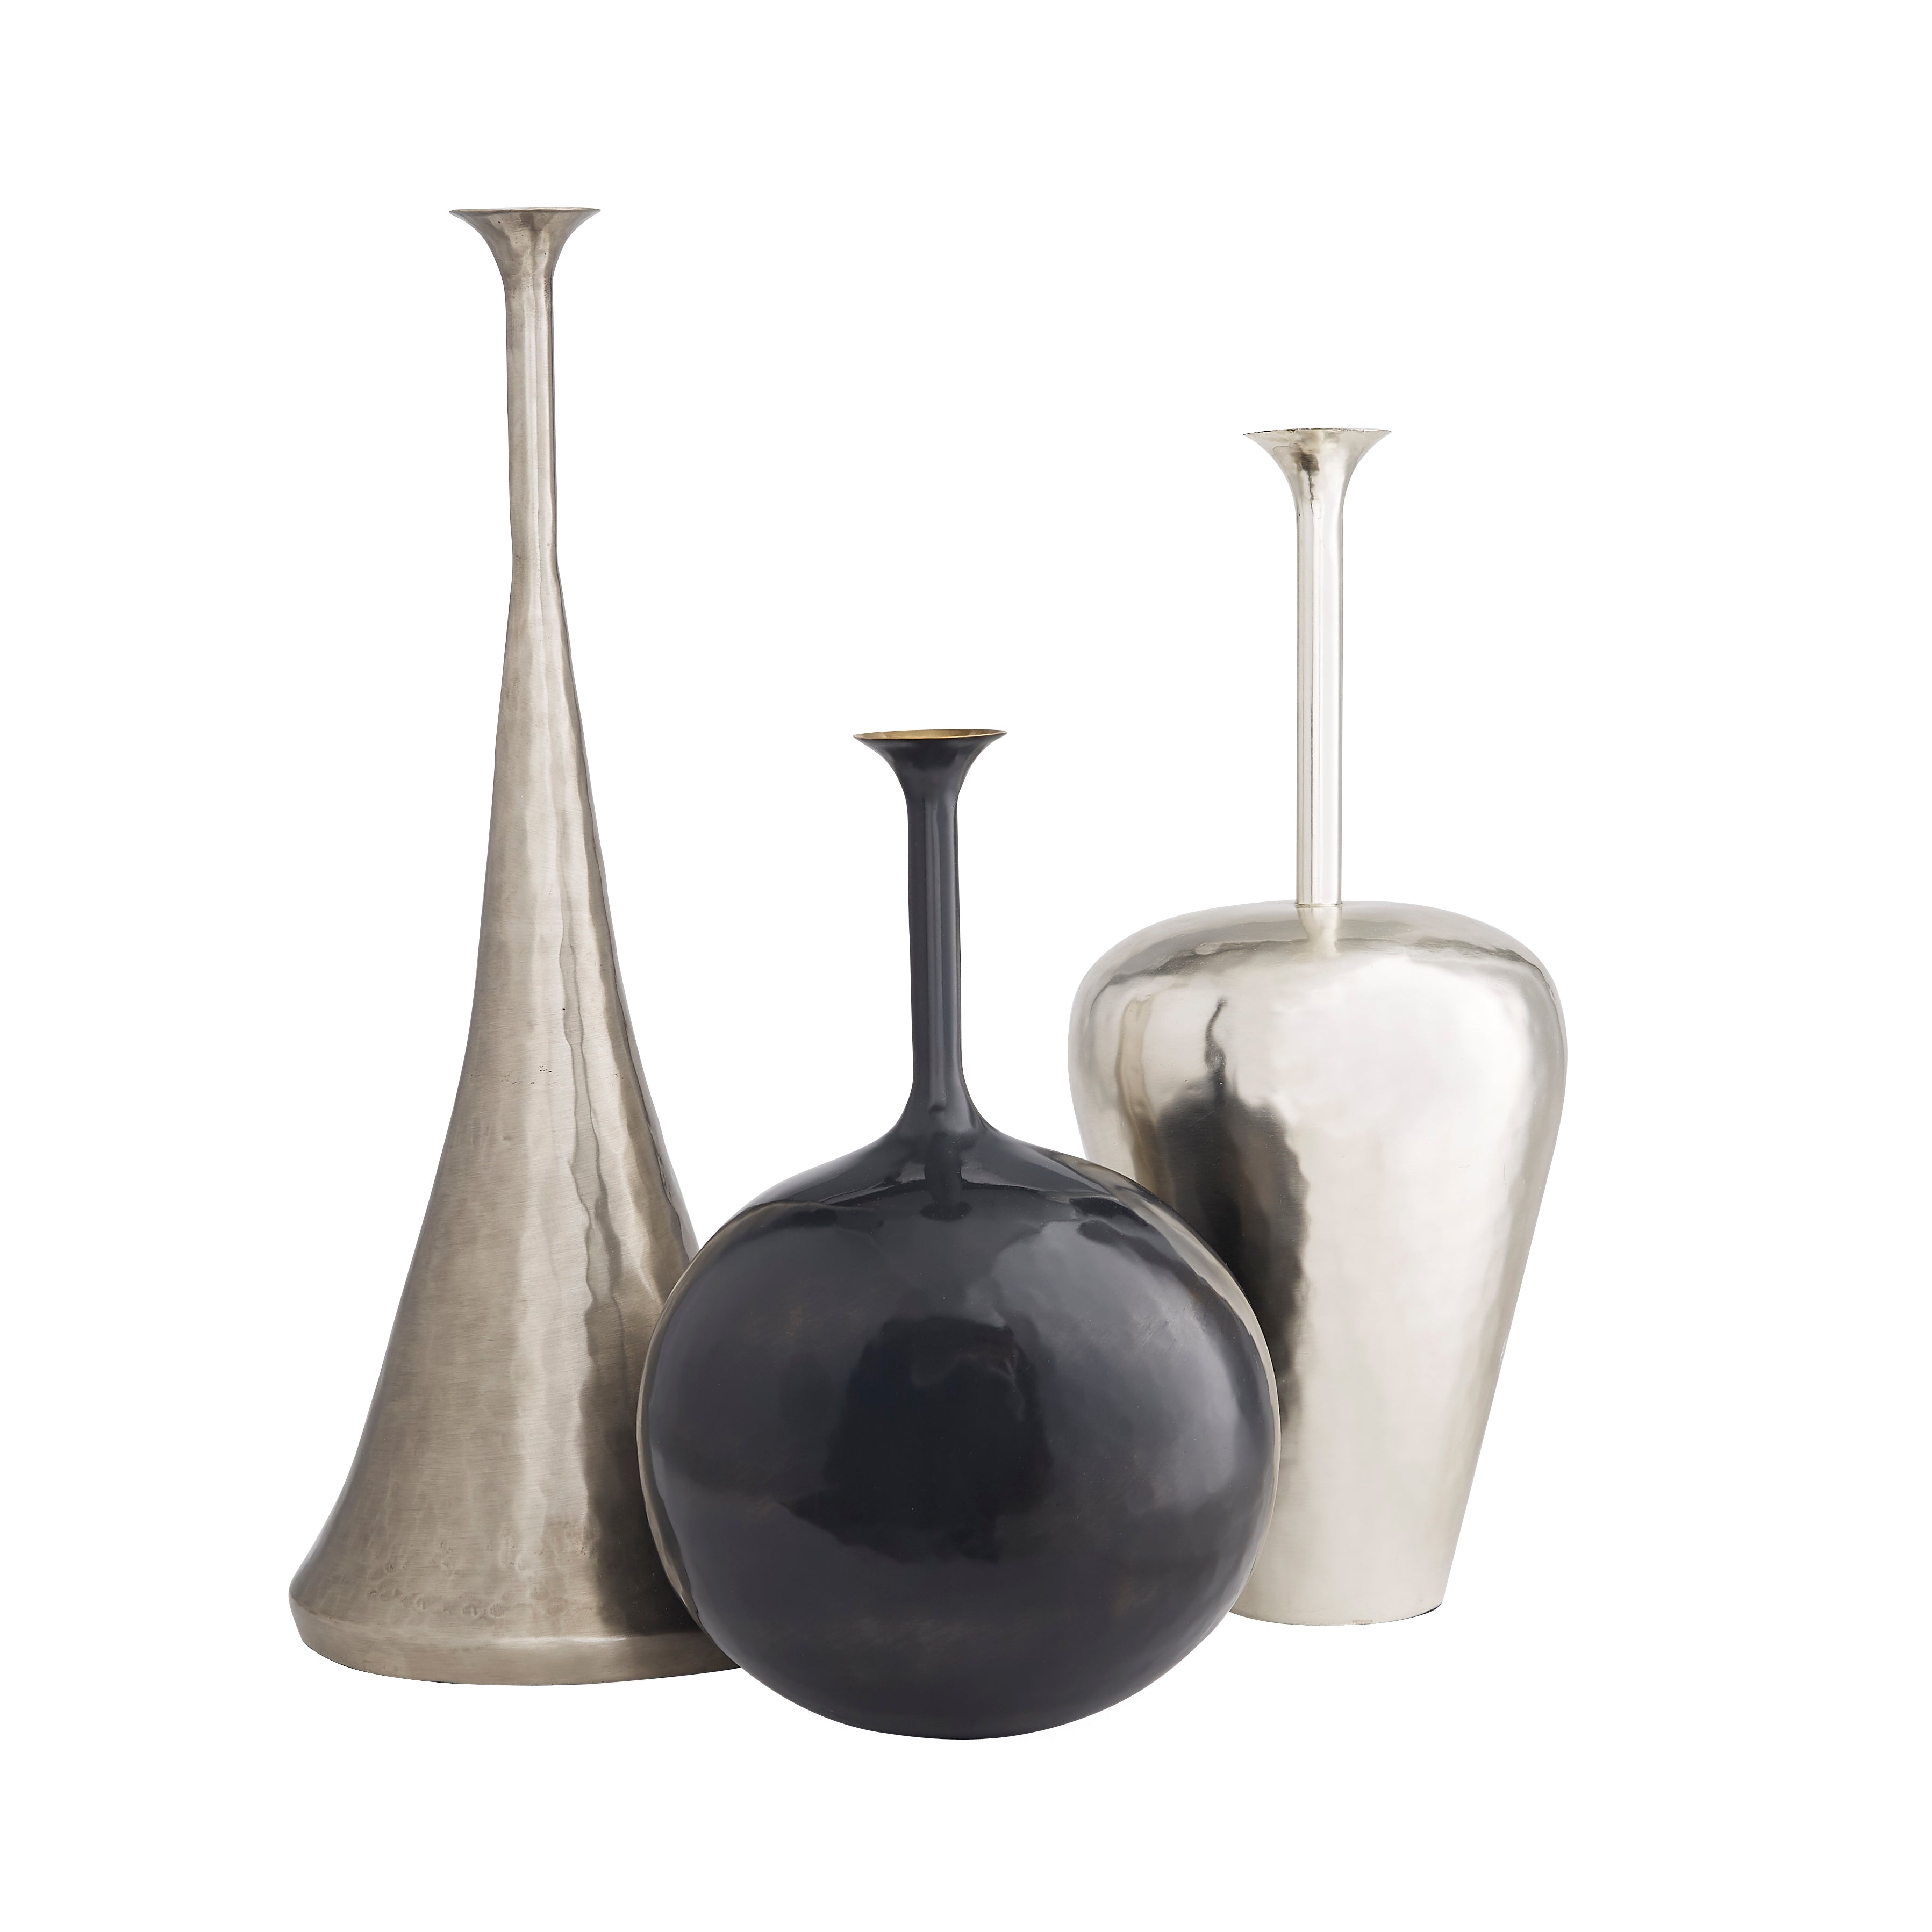 Arteriors Gyles Vases, Set of 3 4858